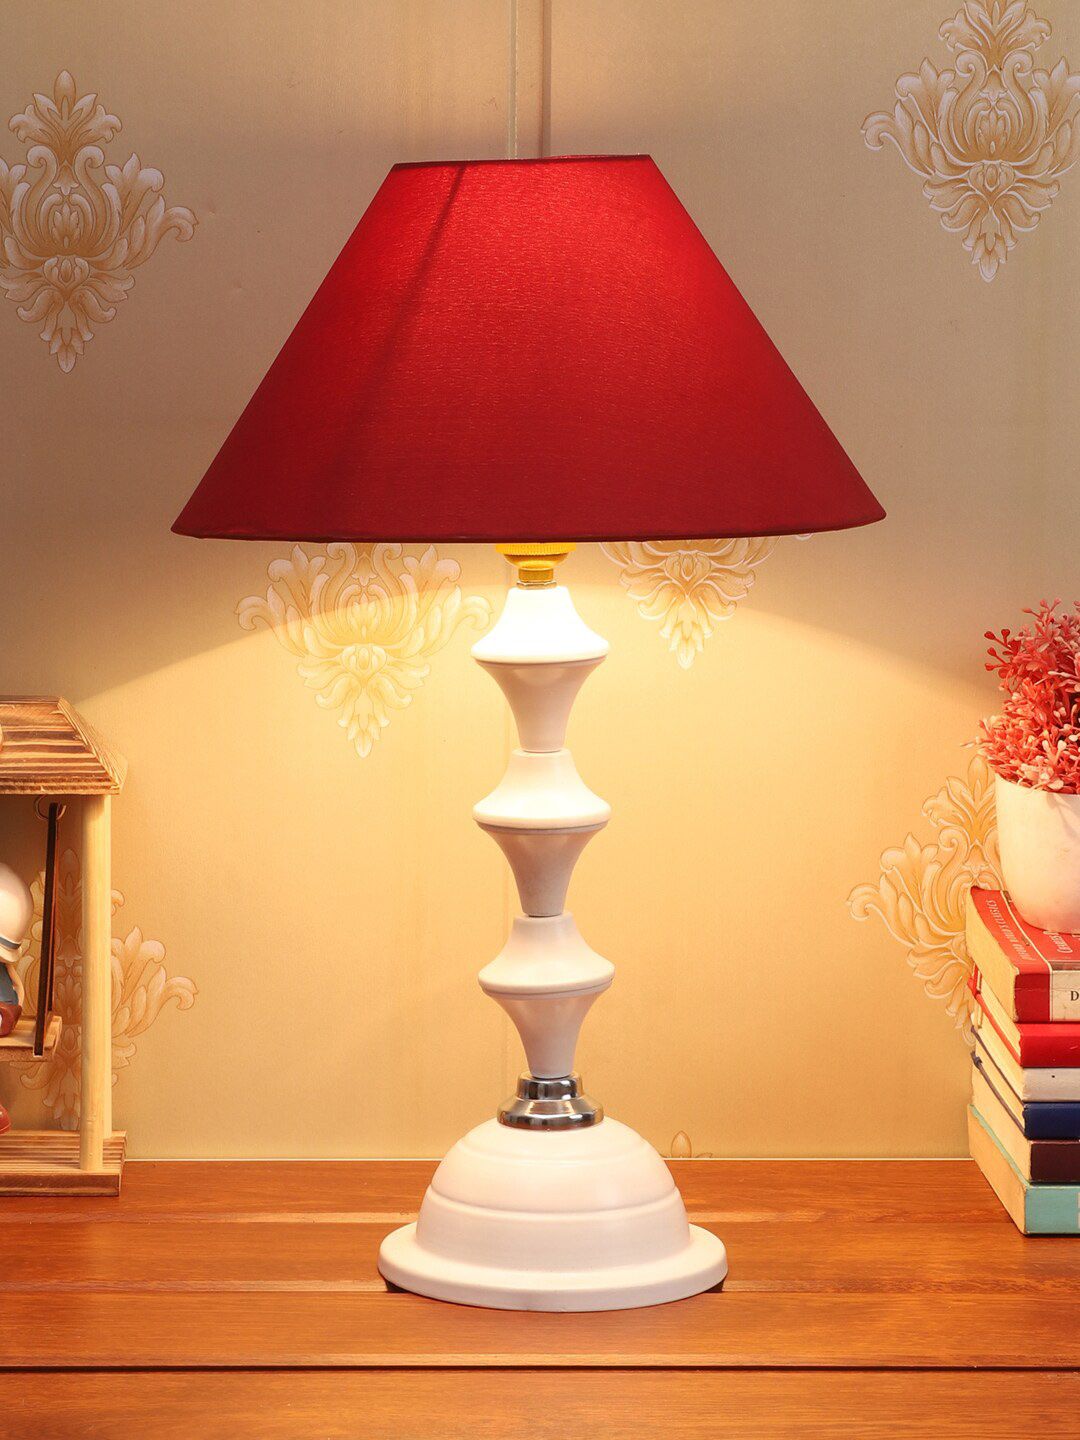 Foziq White Solid Table Lamp Price in India